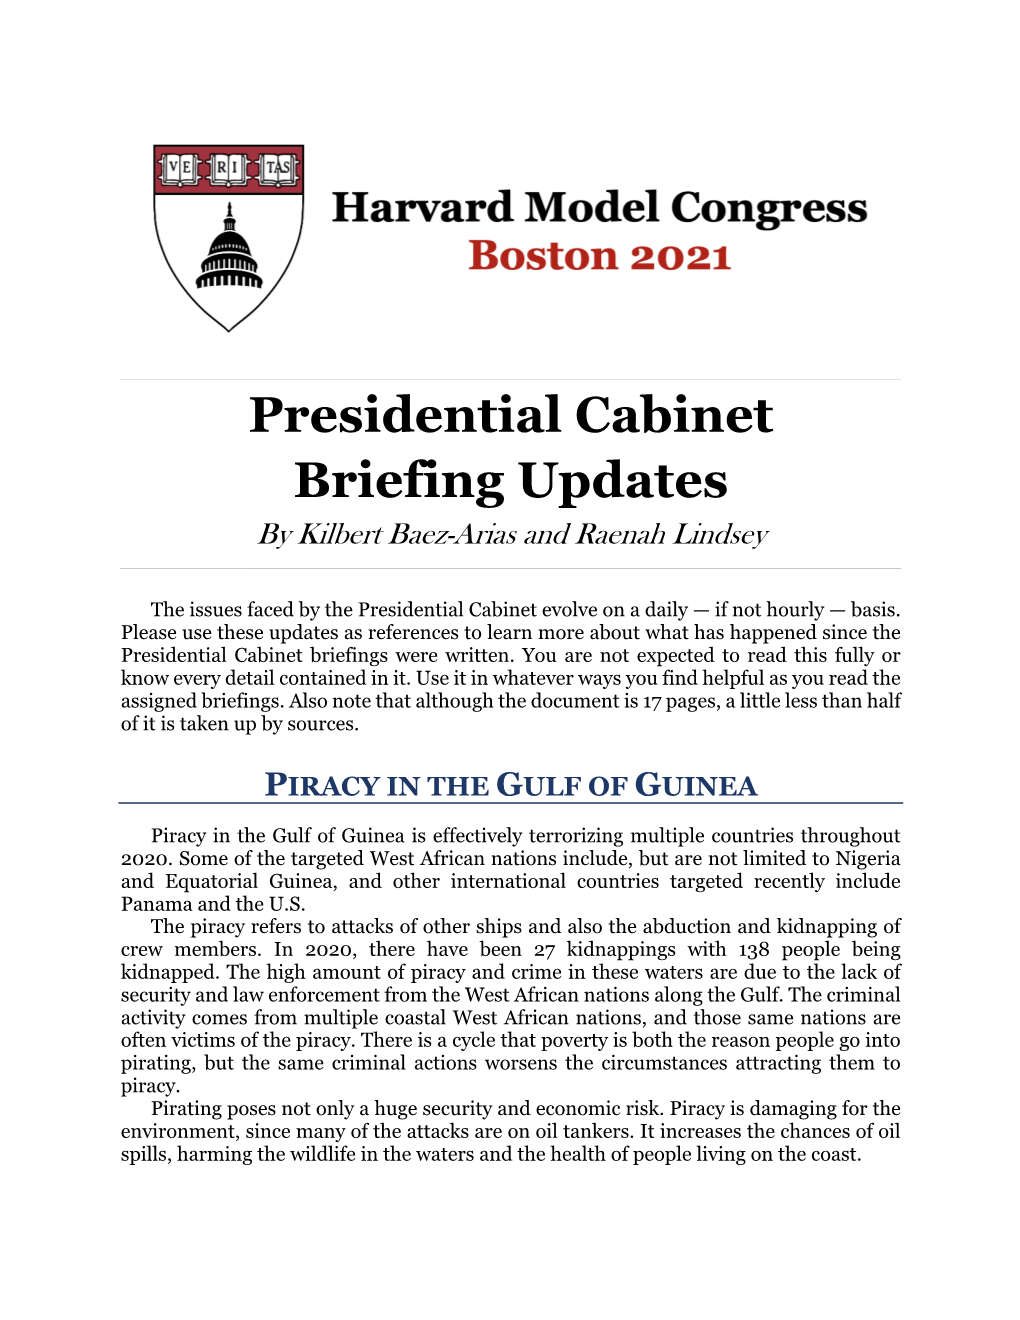 Presidential Cabinet Briefing Updates by Kilbert Baez-Arias and Raenah Lindsey